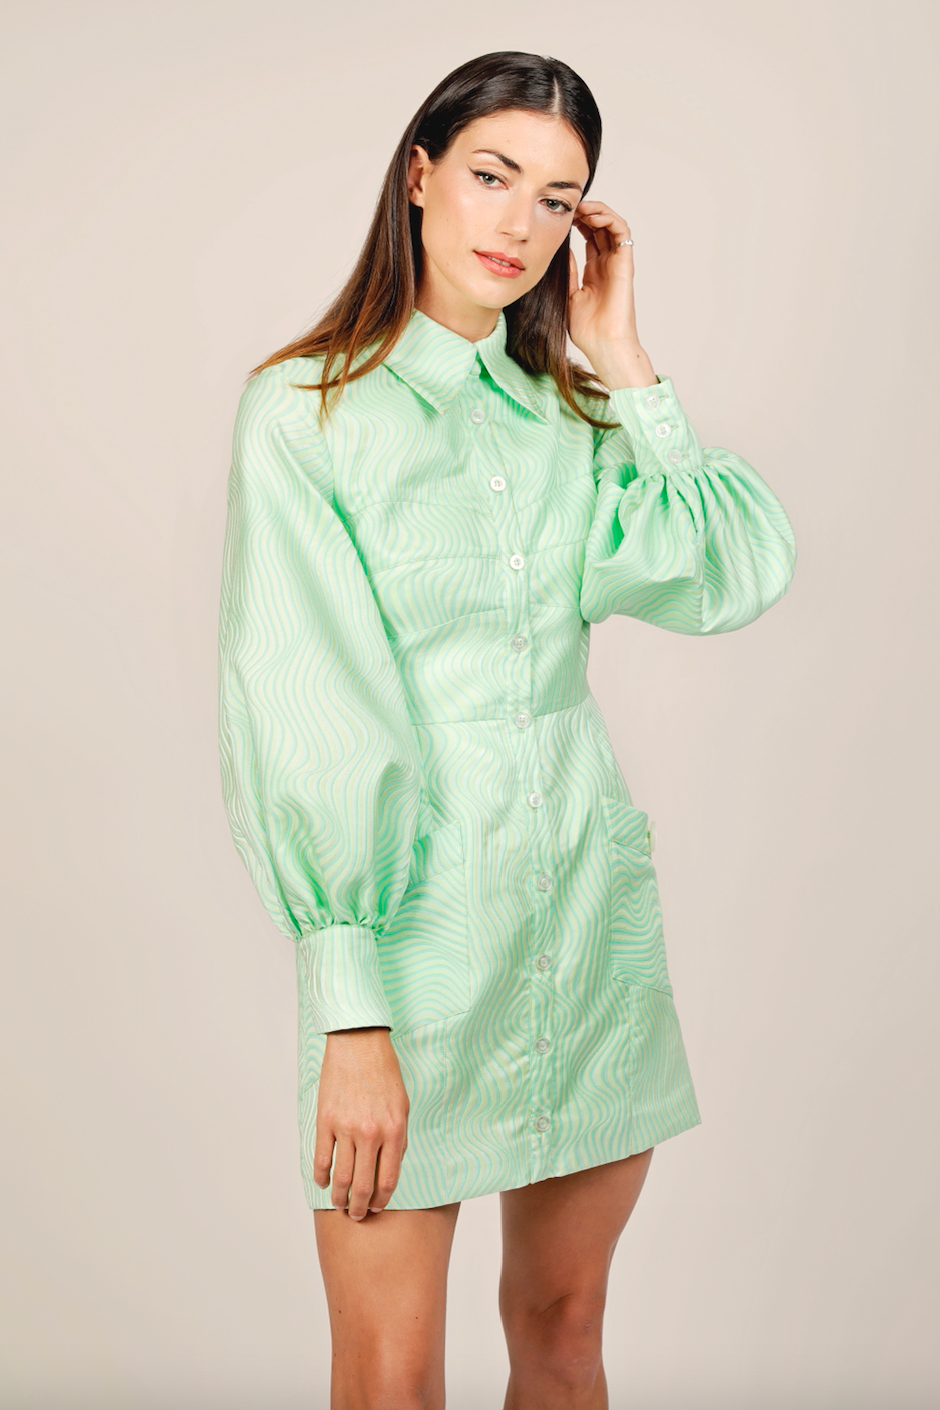 Green jacquard sleeved dress